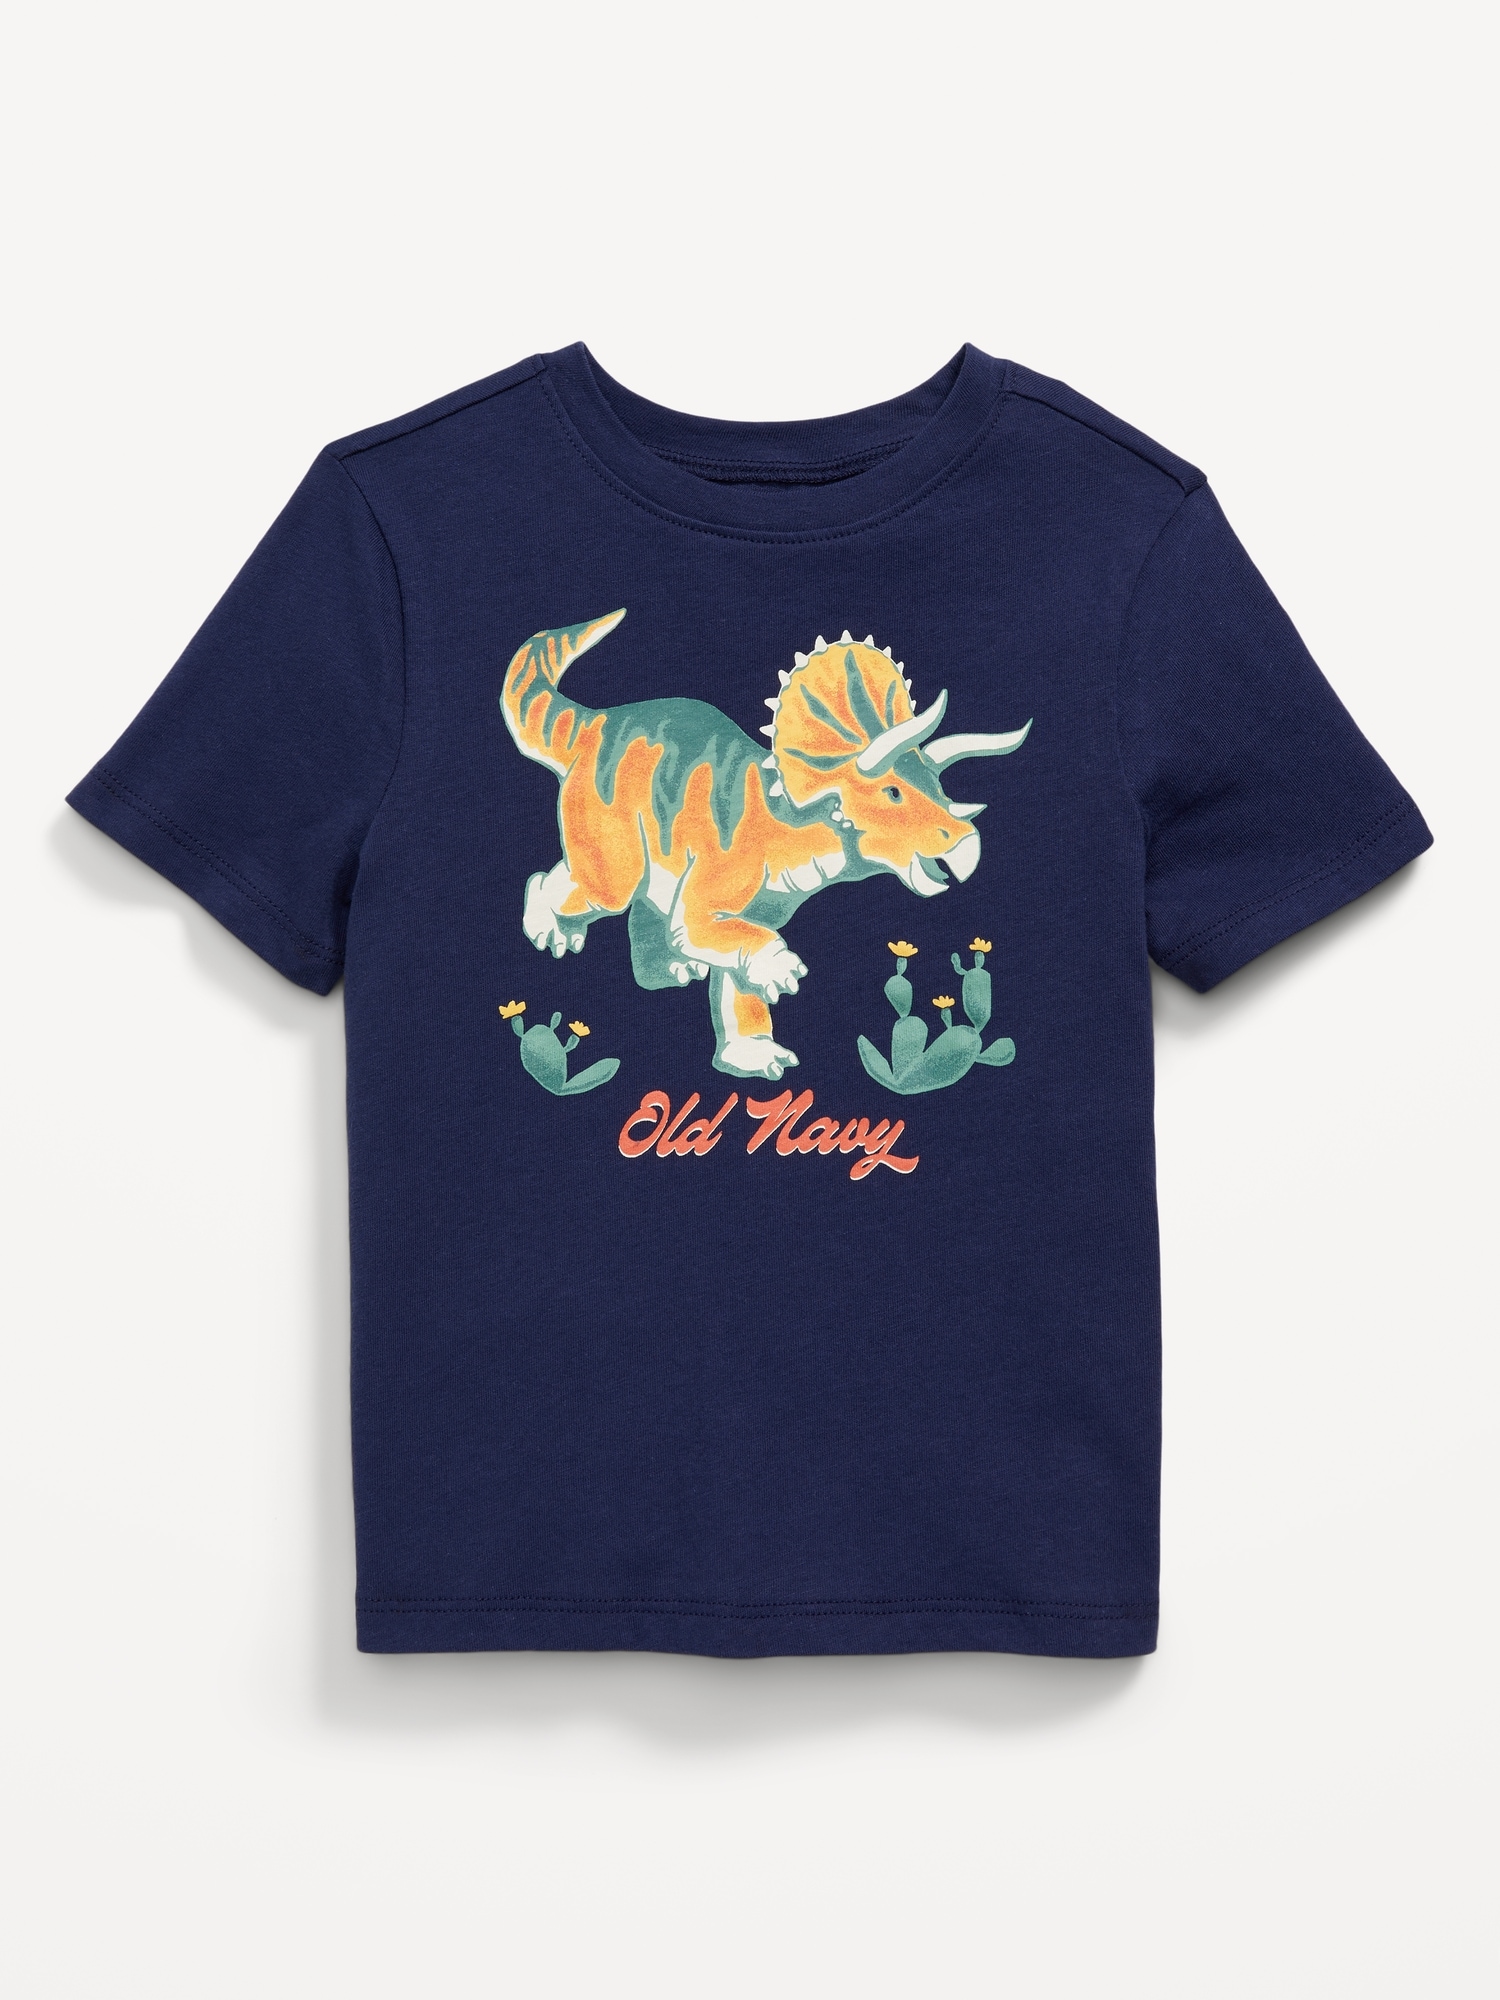 Unisex Logo-Graphic T-shirt for Toddler Hot Deal